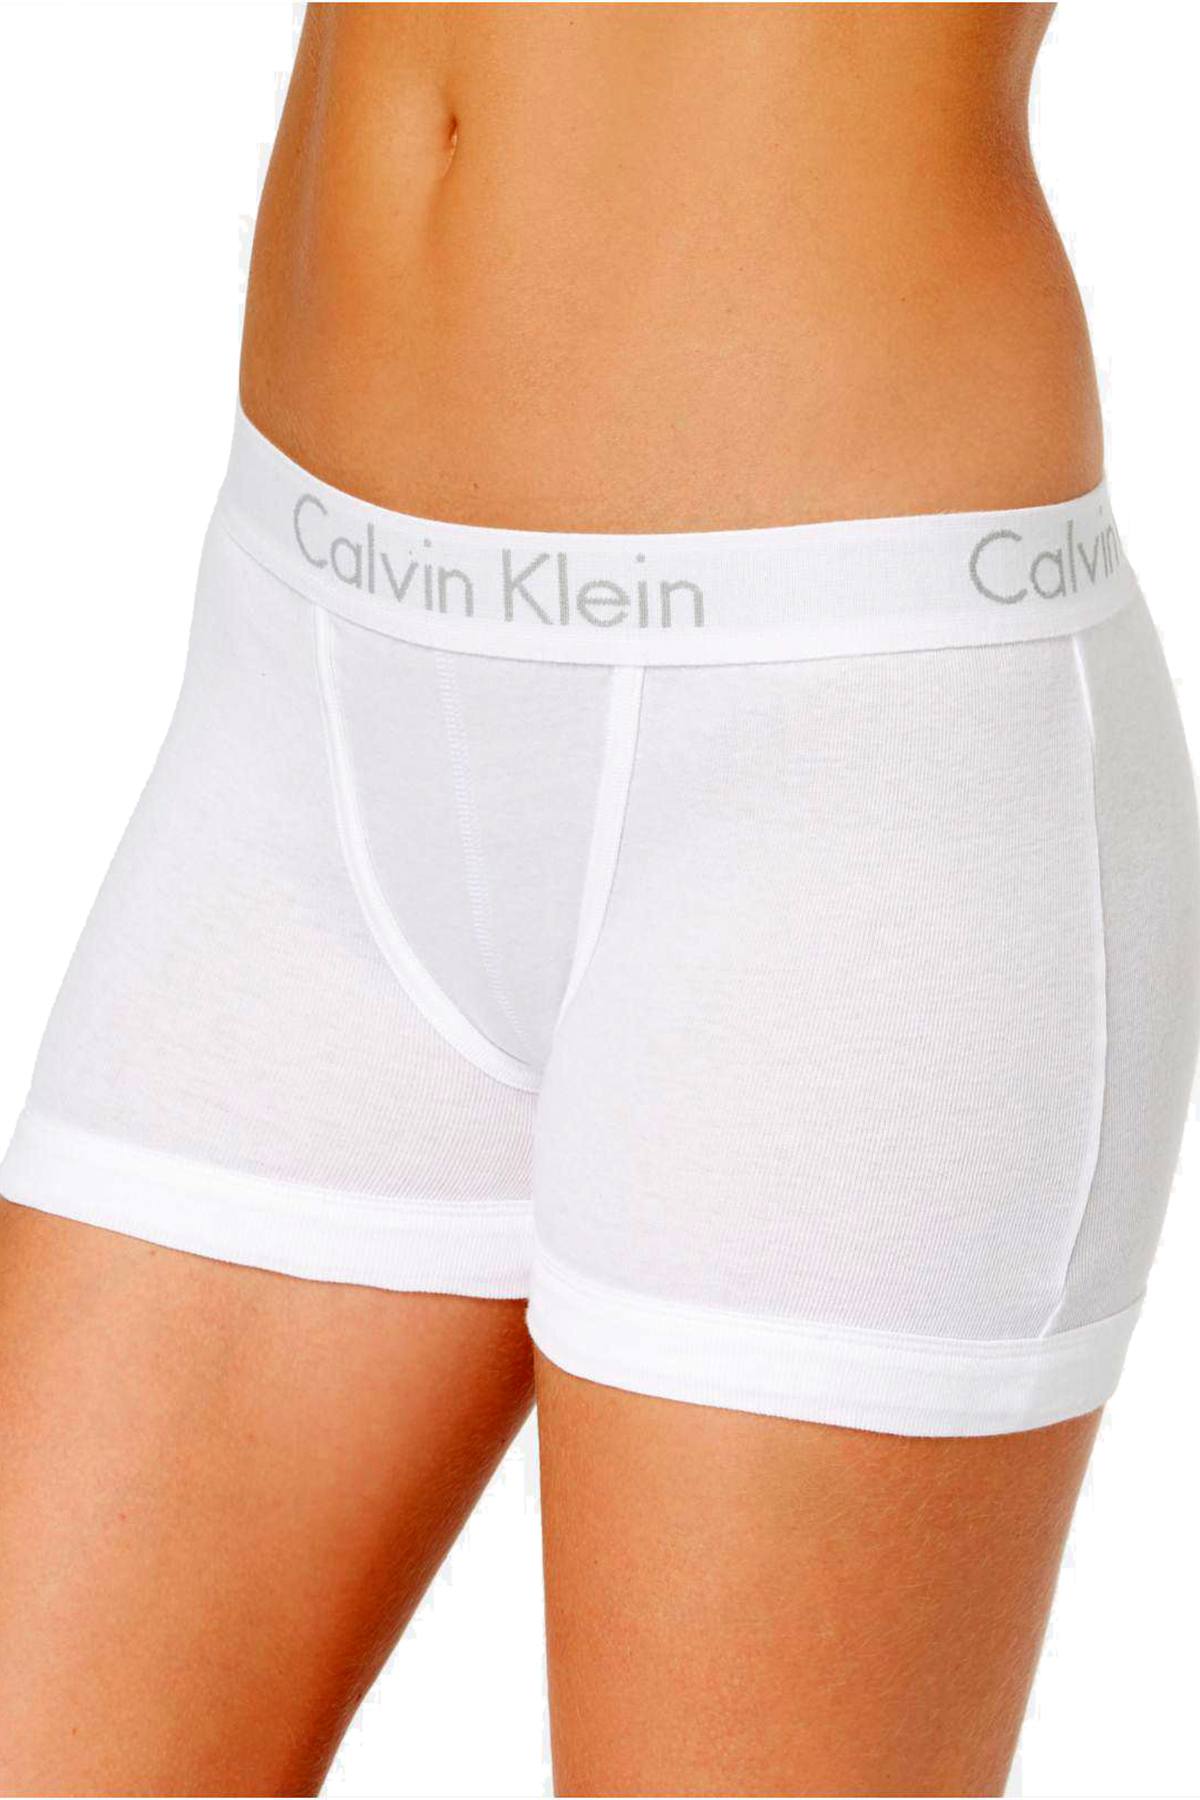 Calvin Klein Womens Boyshorts, Cotton Waistband Briefs